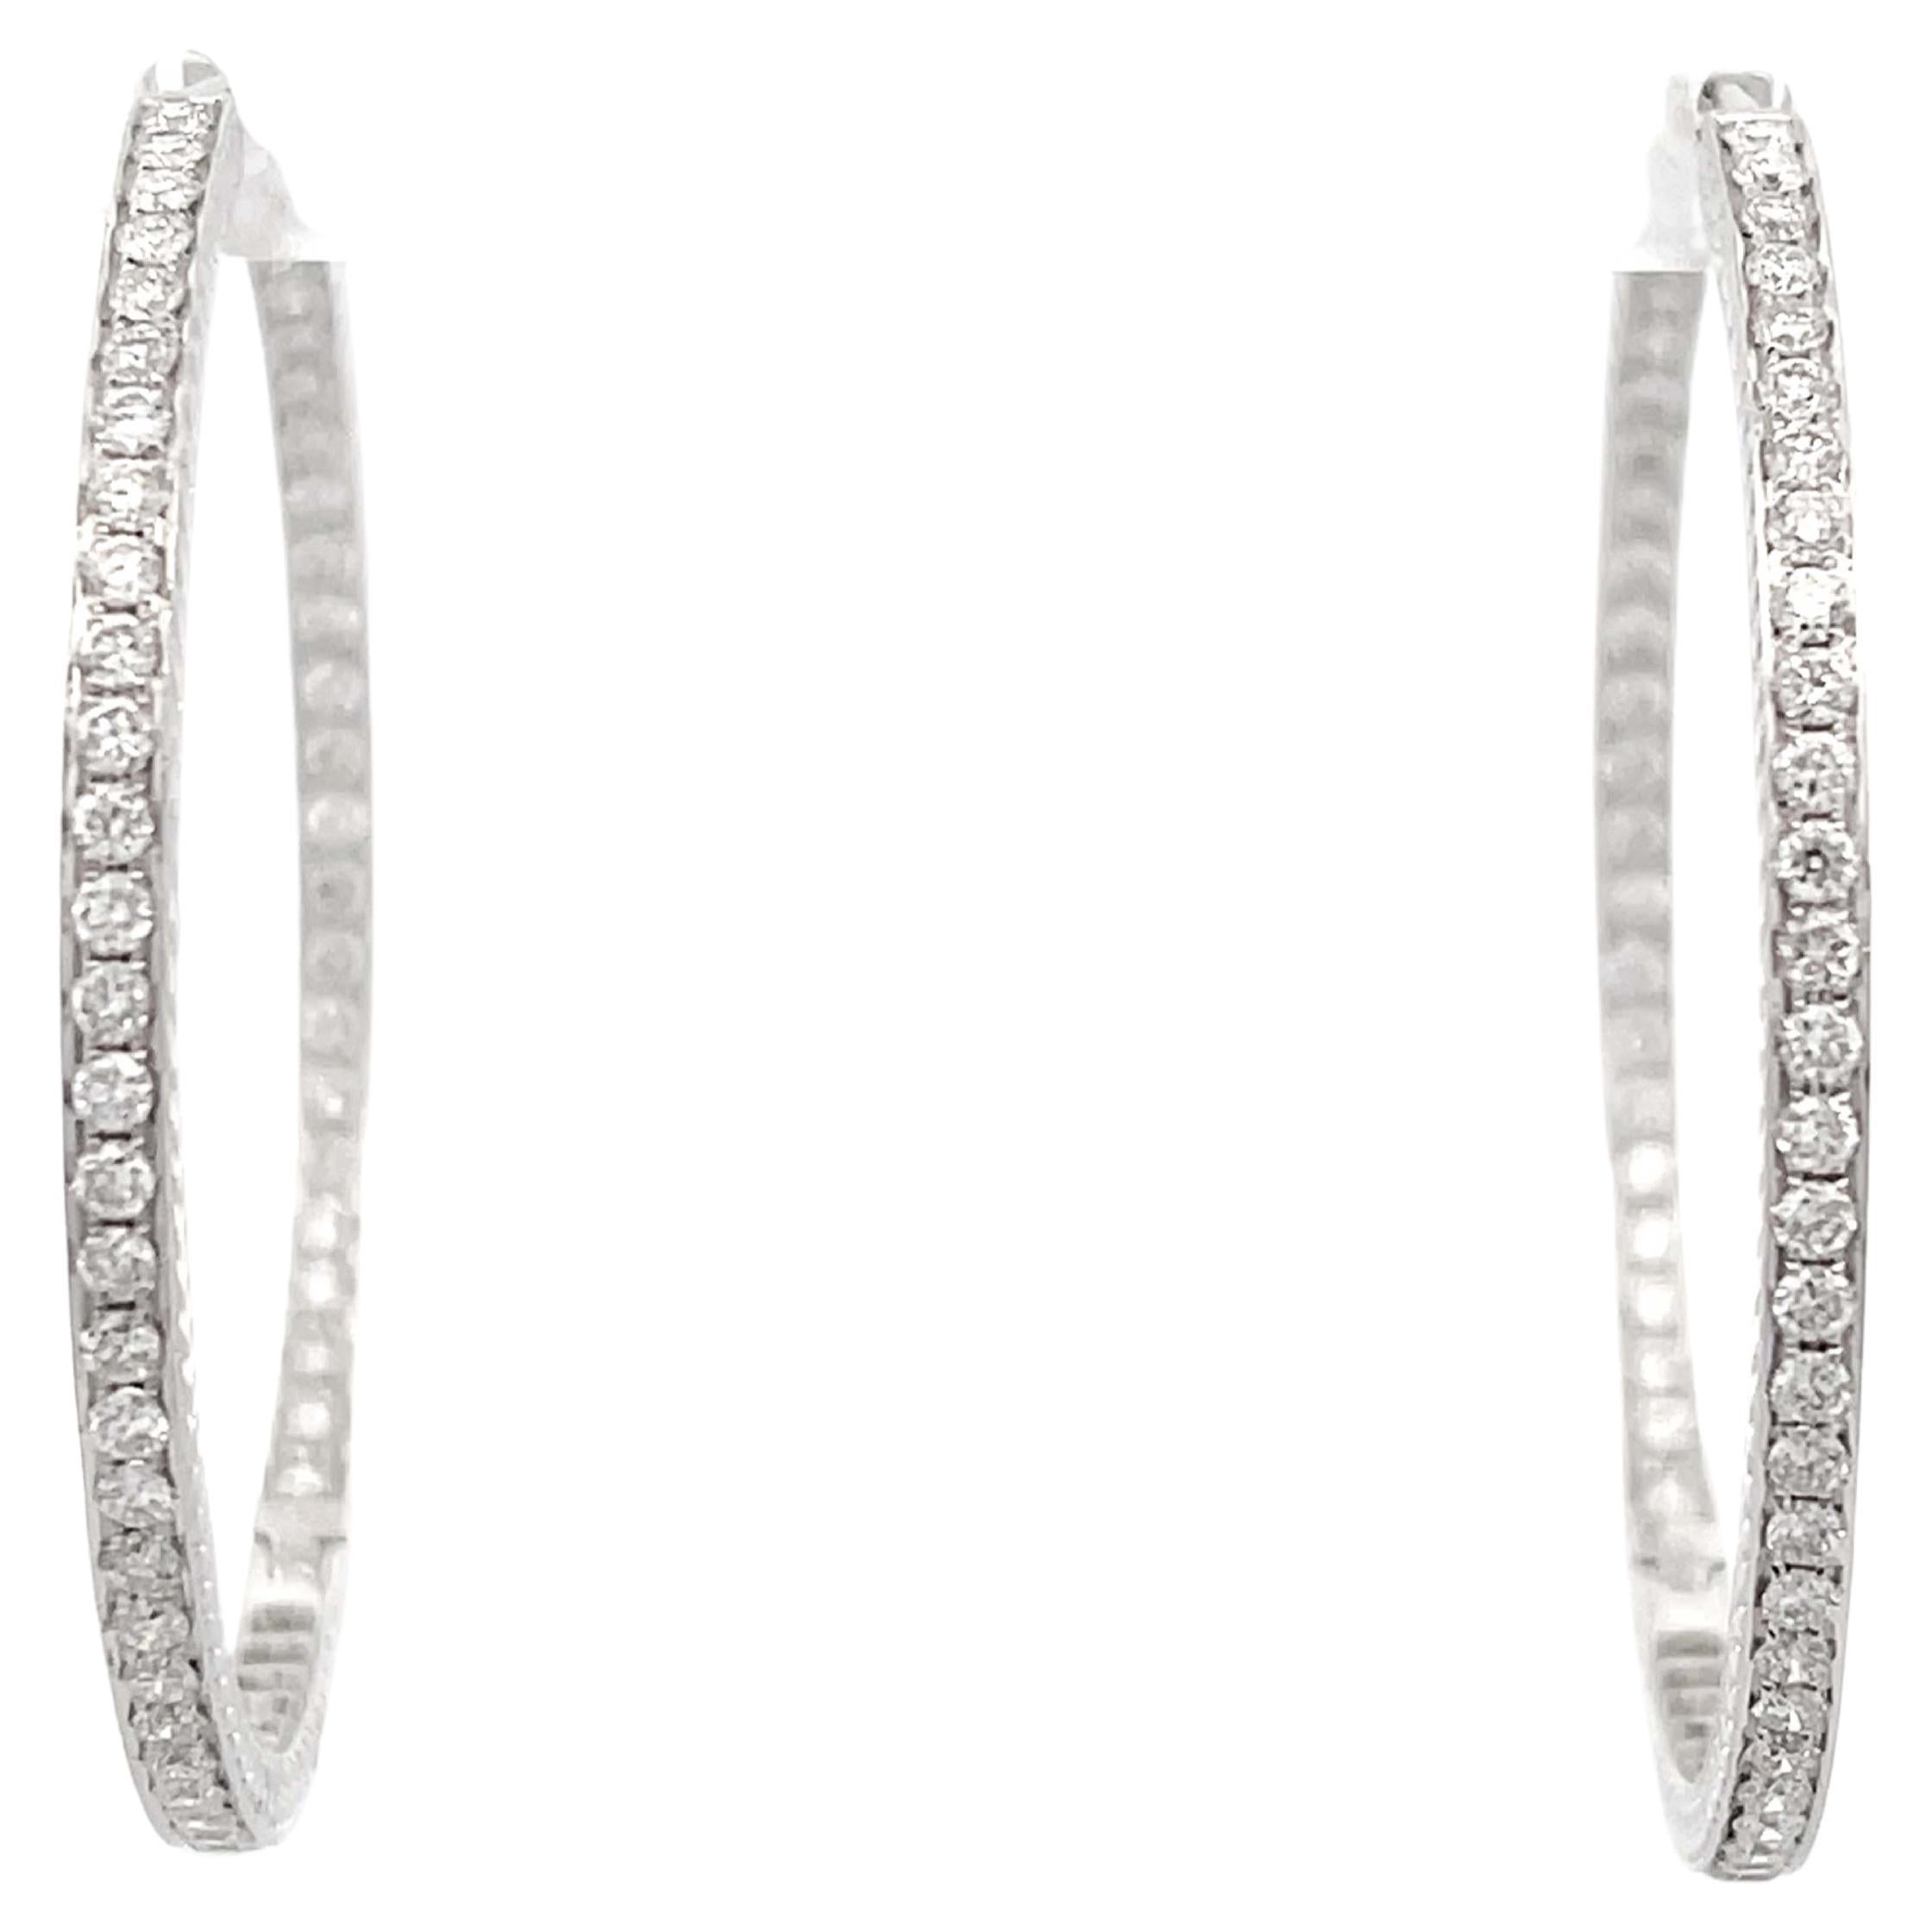 Inside Out Hand Engraved Large Diamond Hoop Earrings in 18k White Gold